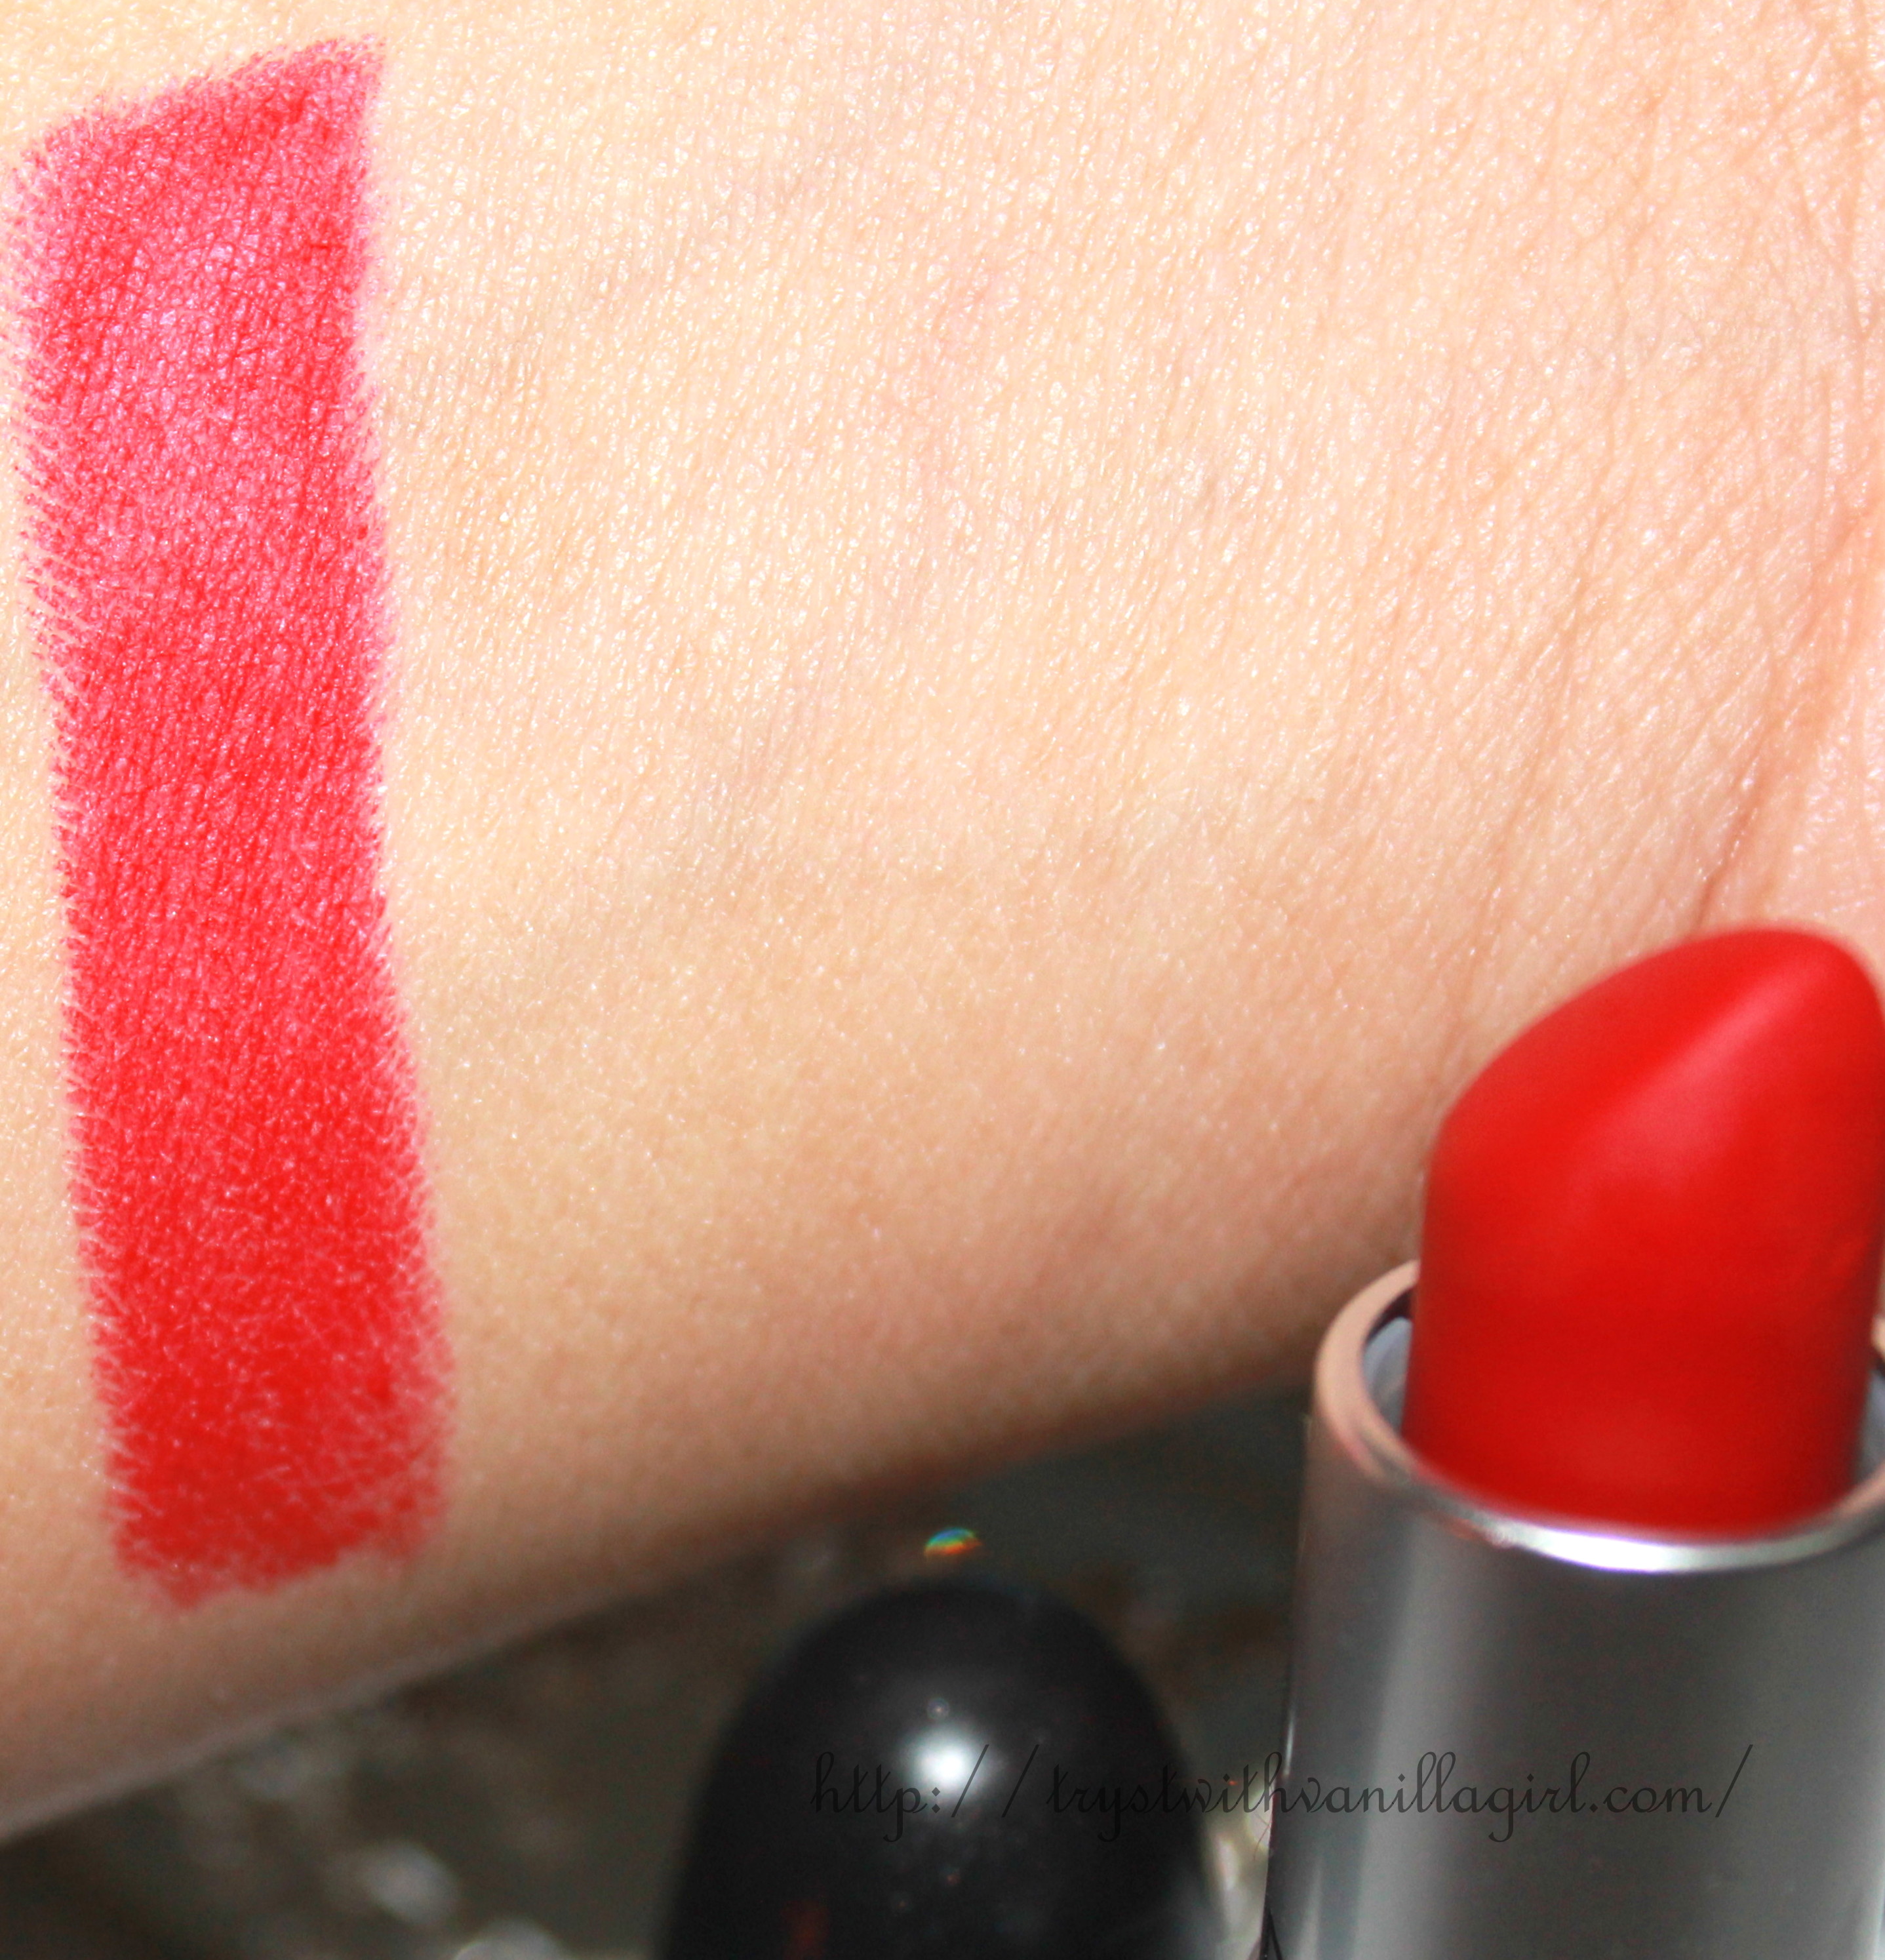 MAC Retro Matte Lipstick Ruby Woo Review,Swatch,Photos